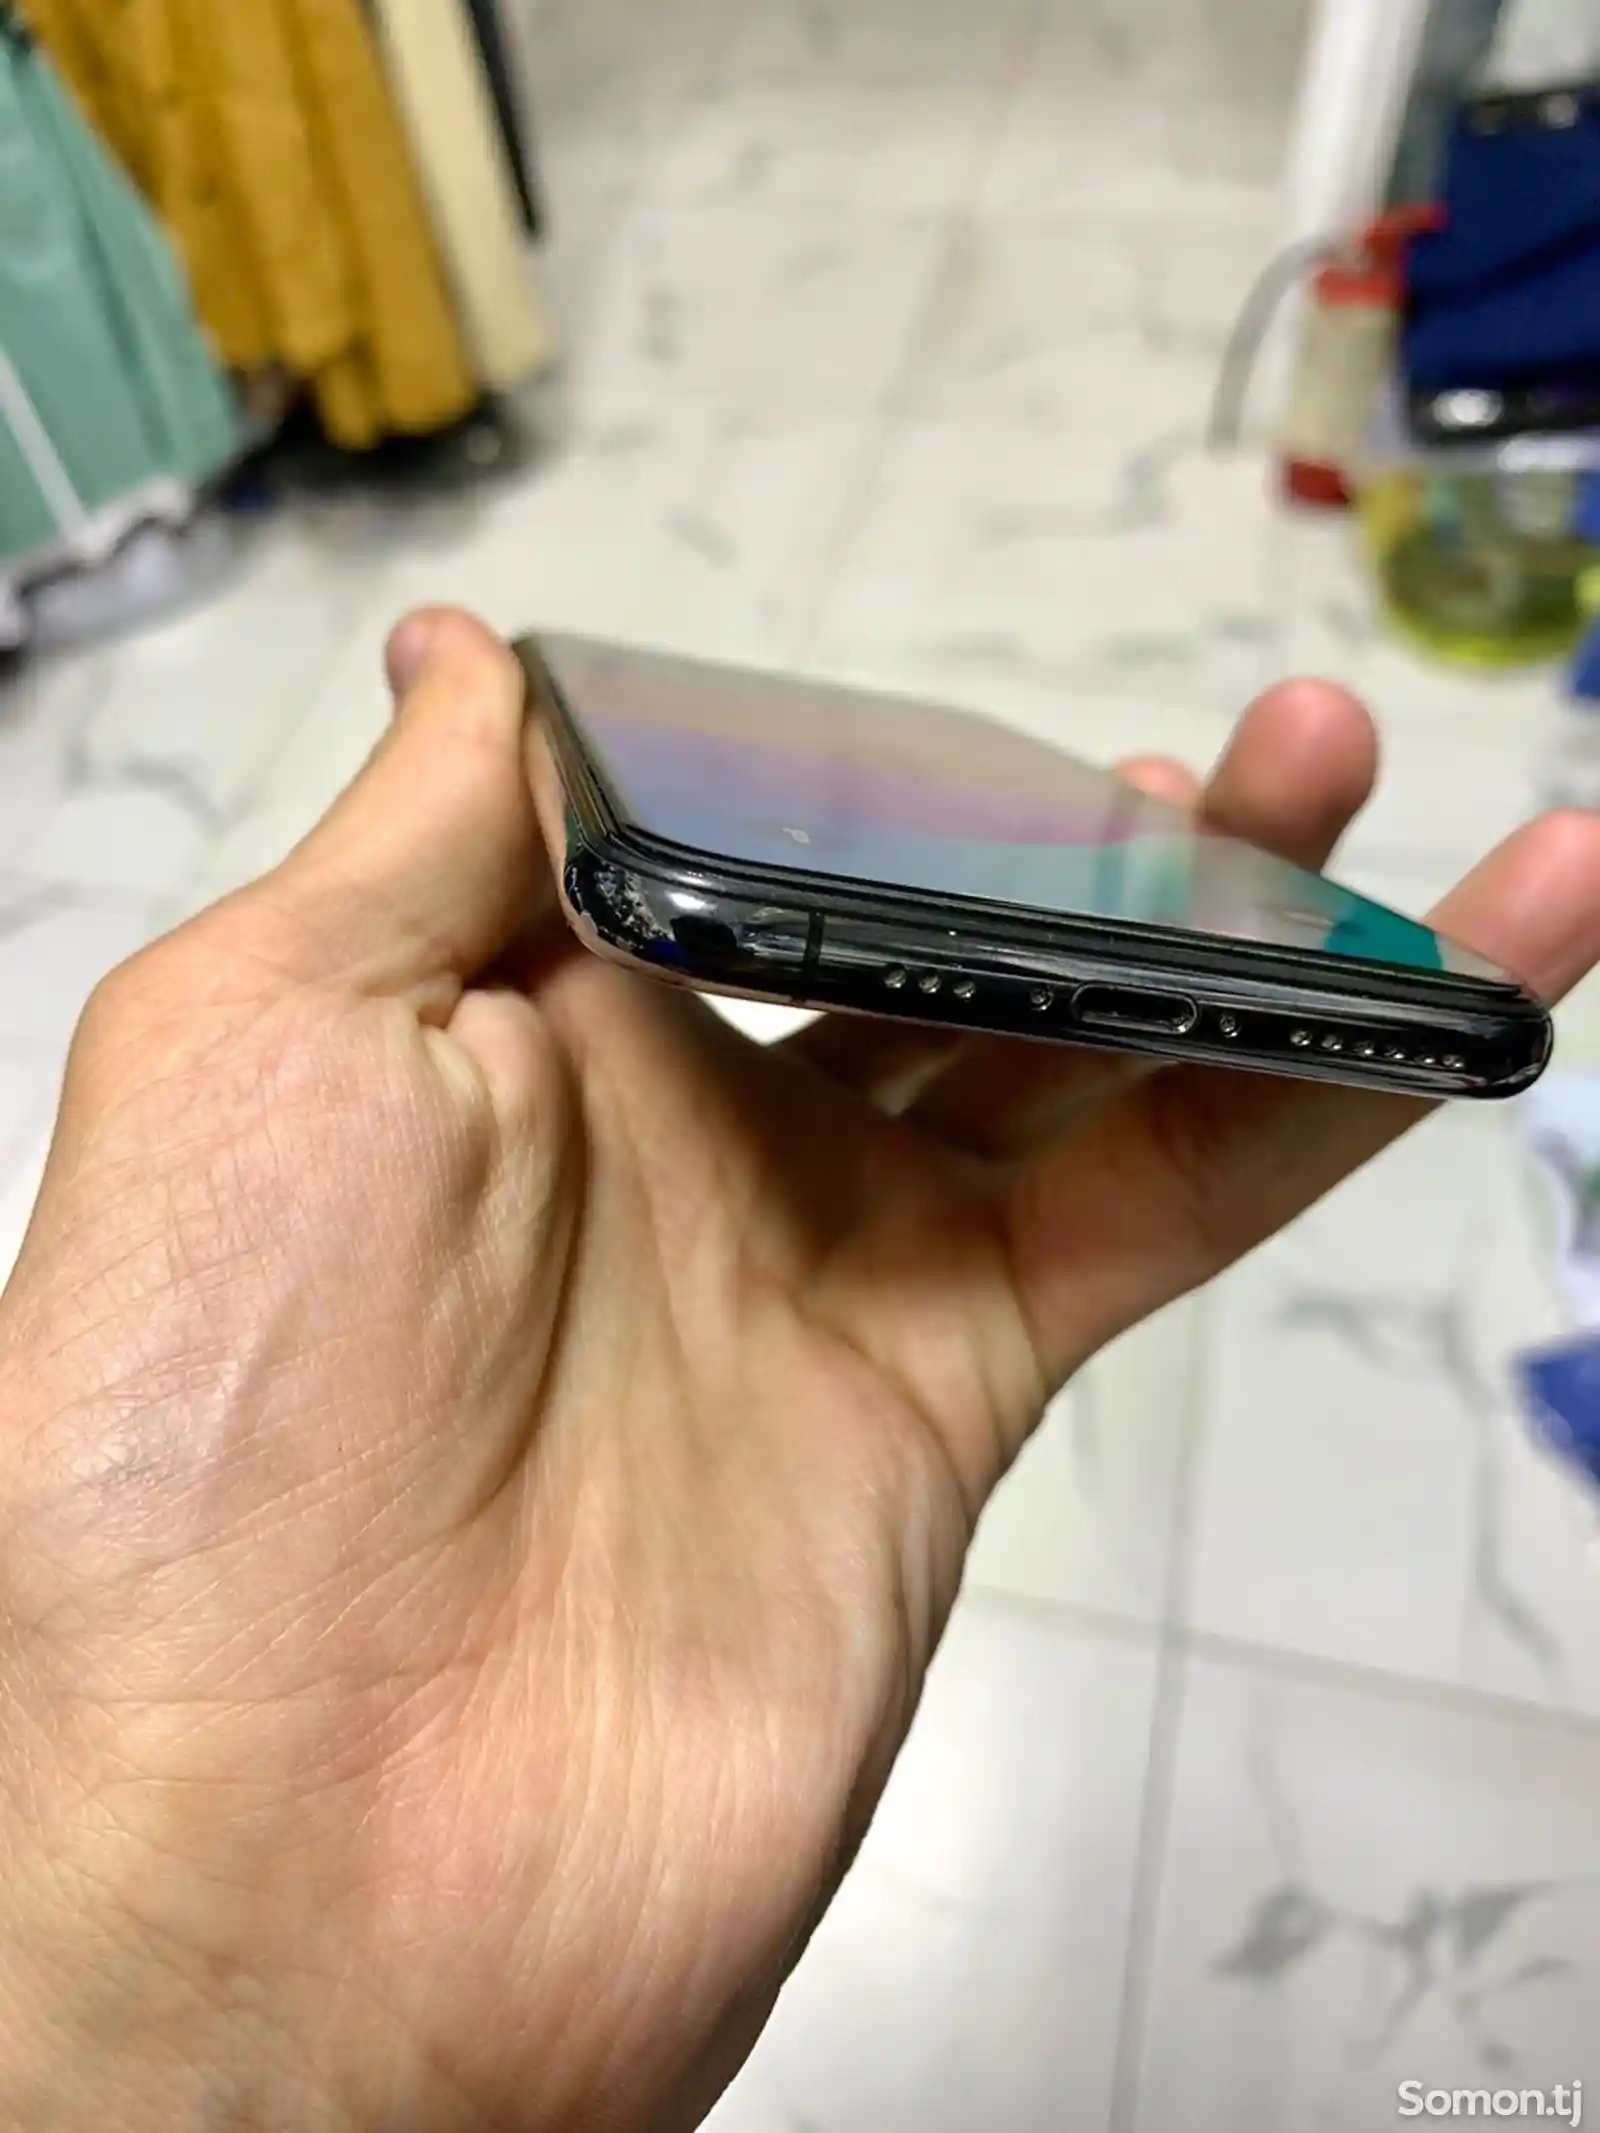 Apple iPhone X, 64 gb, Silver-6